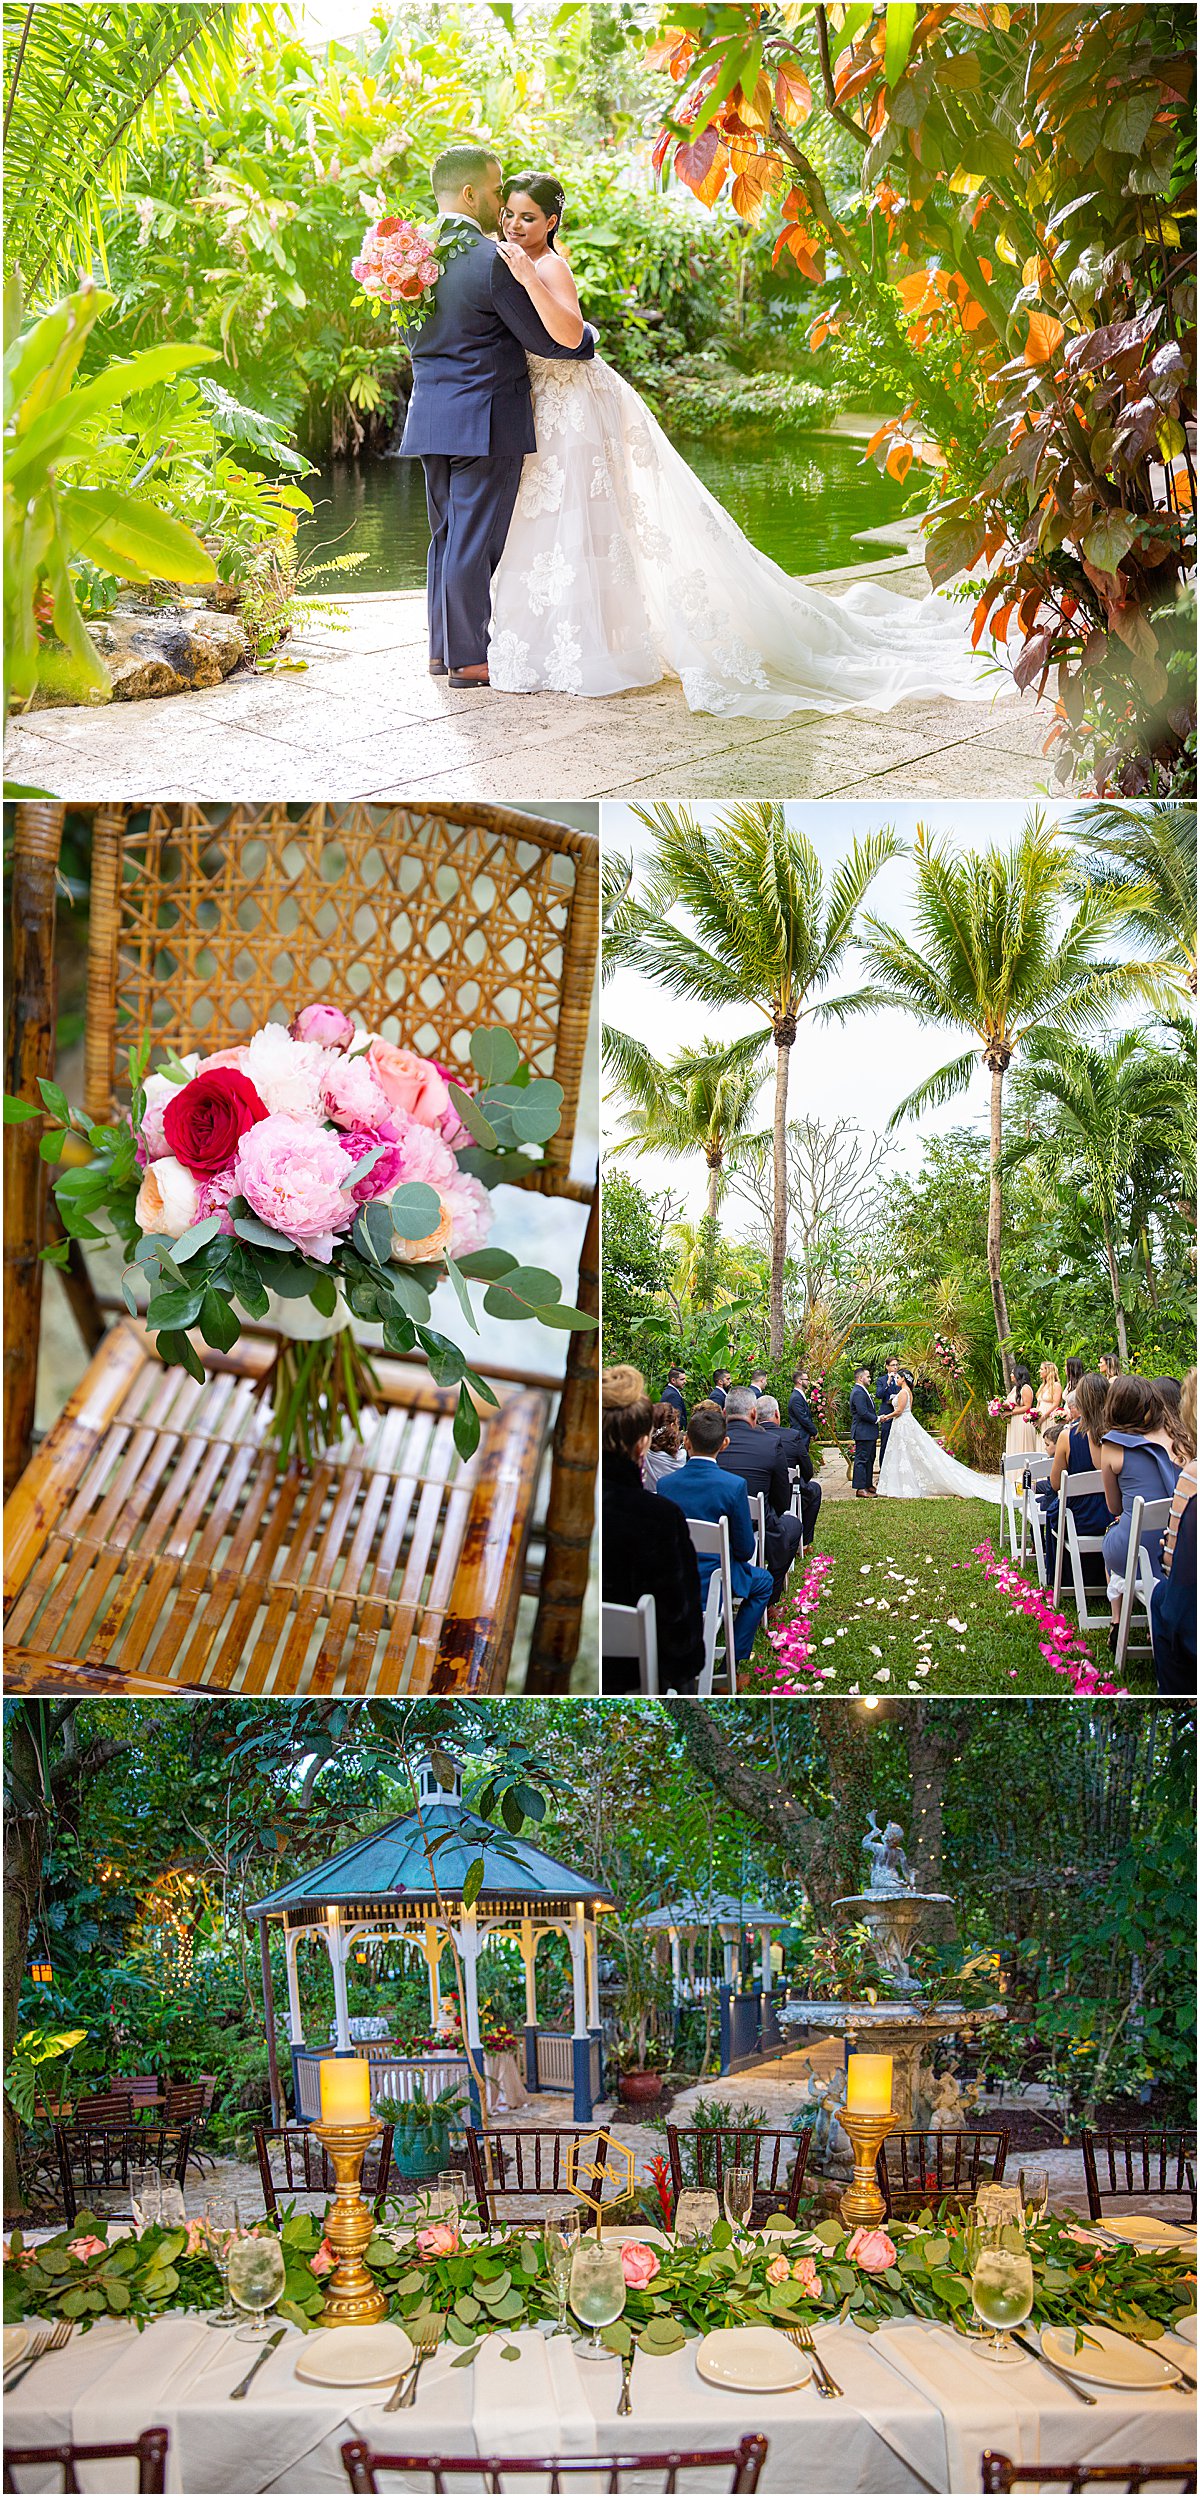 Sundy House | Top Palm Beach Wedding Venue | Married in Palm Beach | www.marriedinpalmbeach.com | Krystal Zaskey Photography